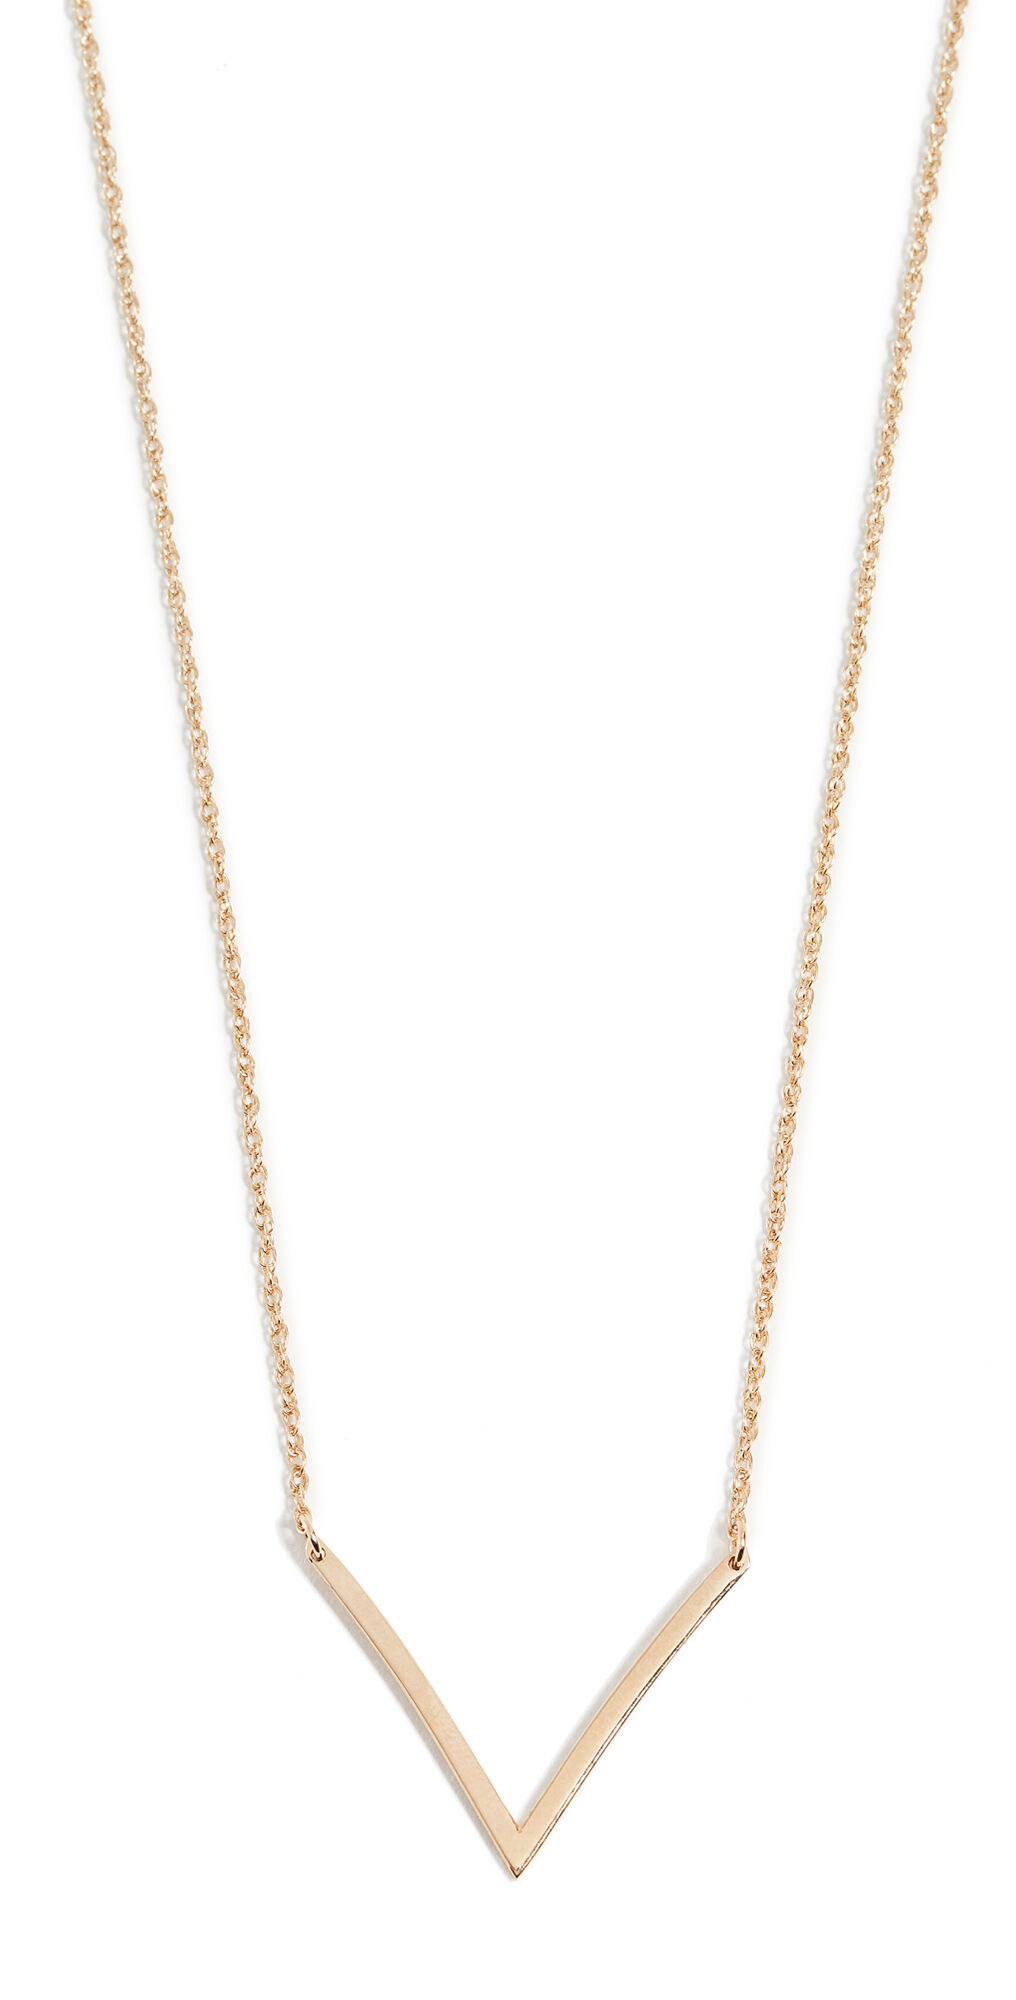 Jennifer Zeuner Jewelry Bianca Small Necklace Gold One Size  Gold  size:One Size